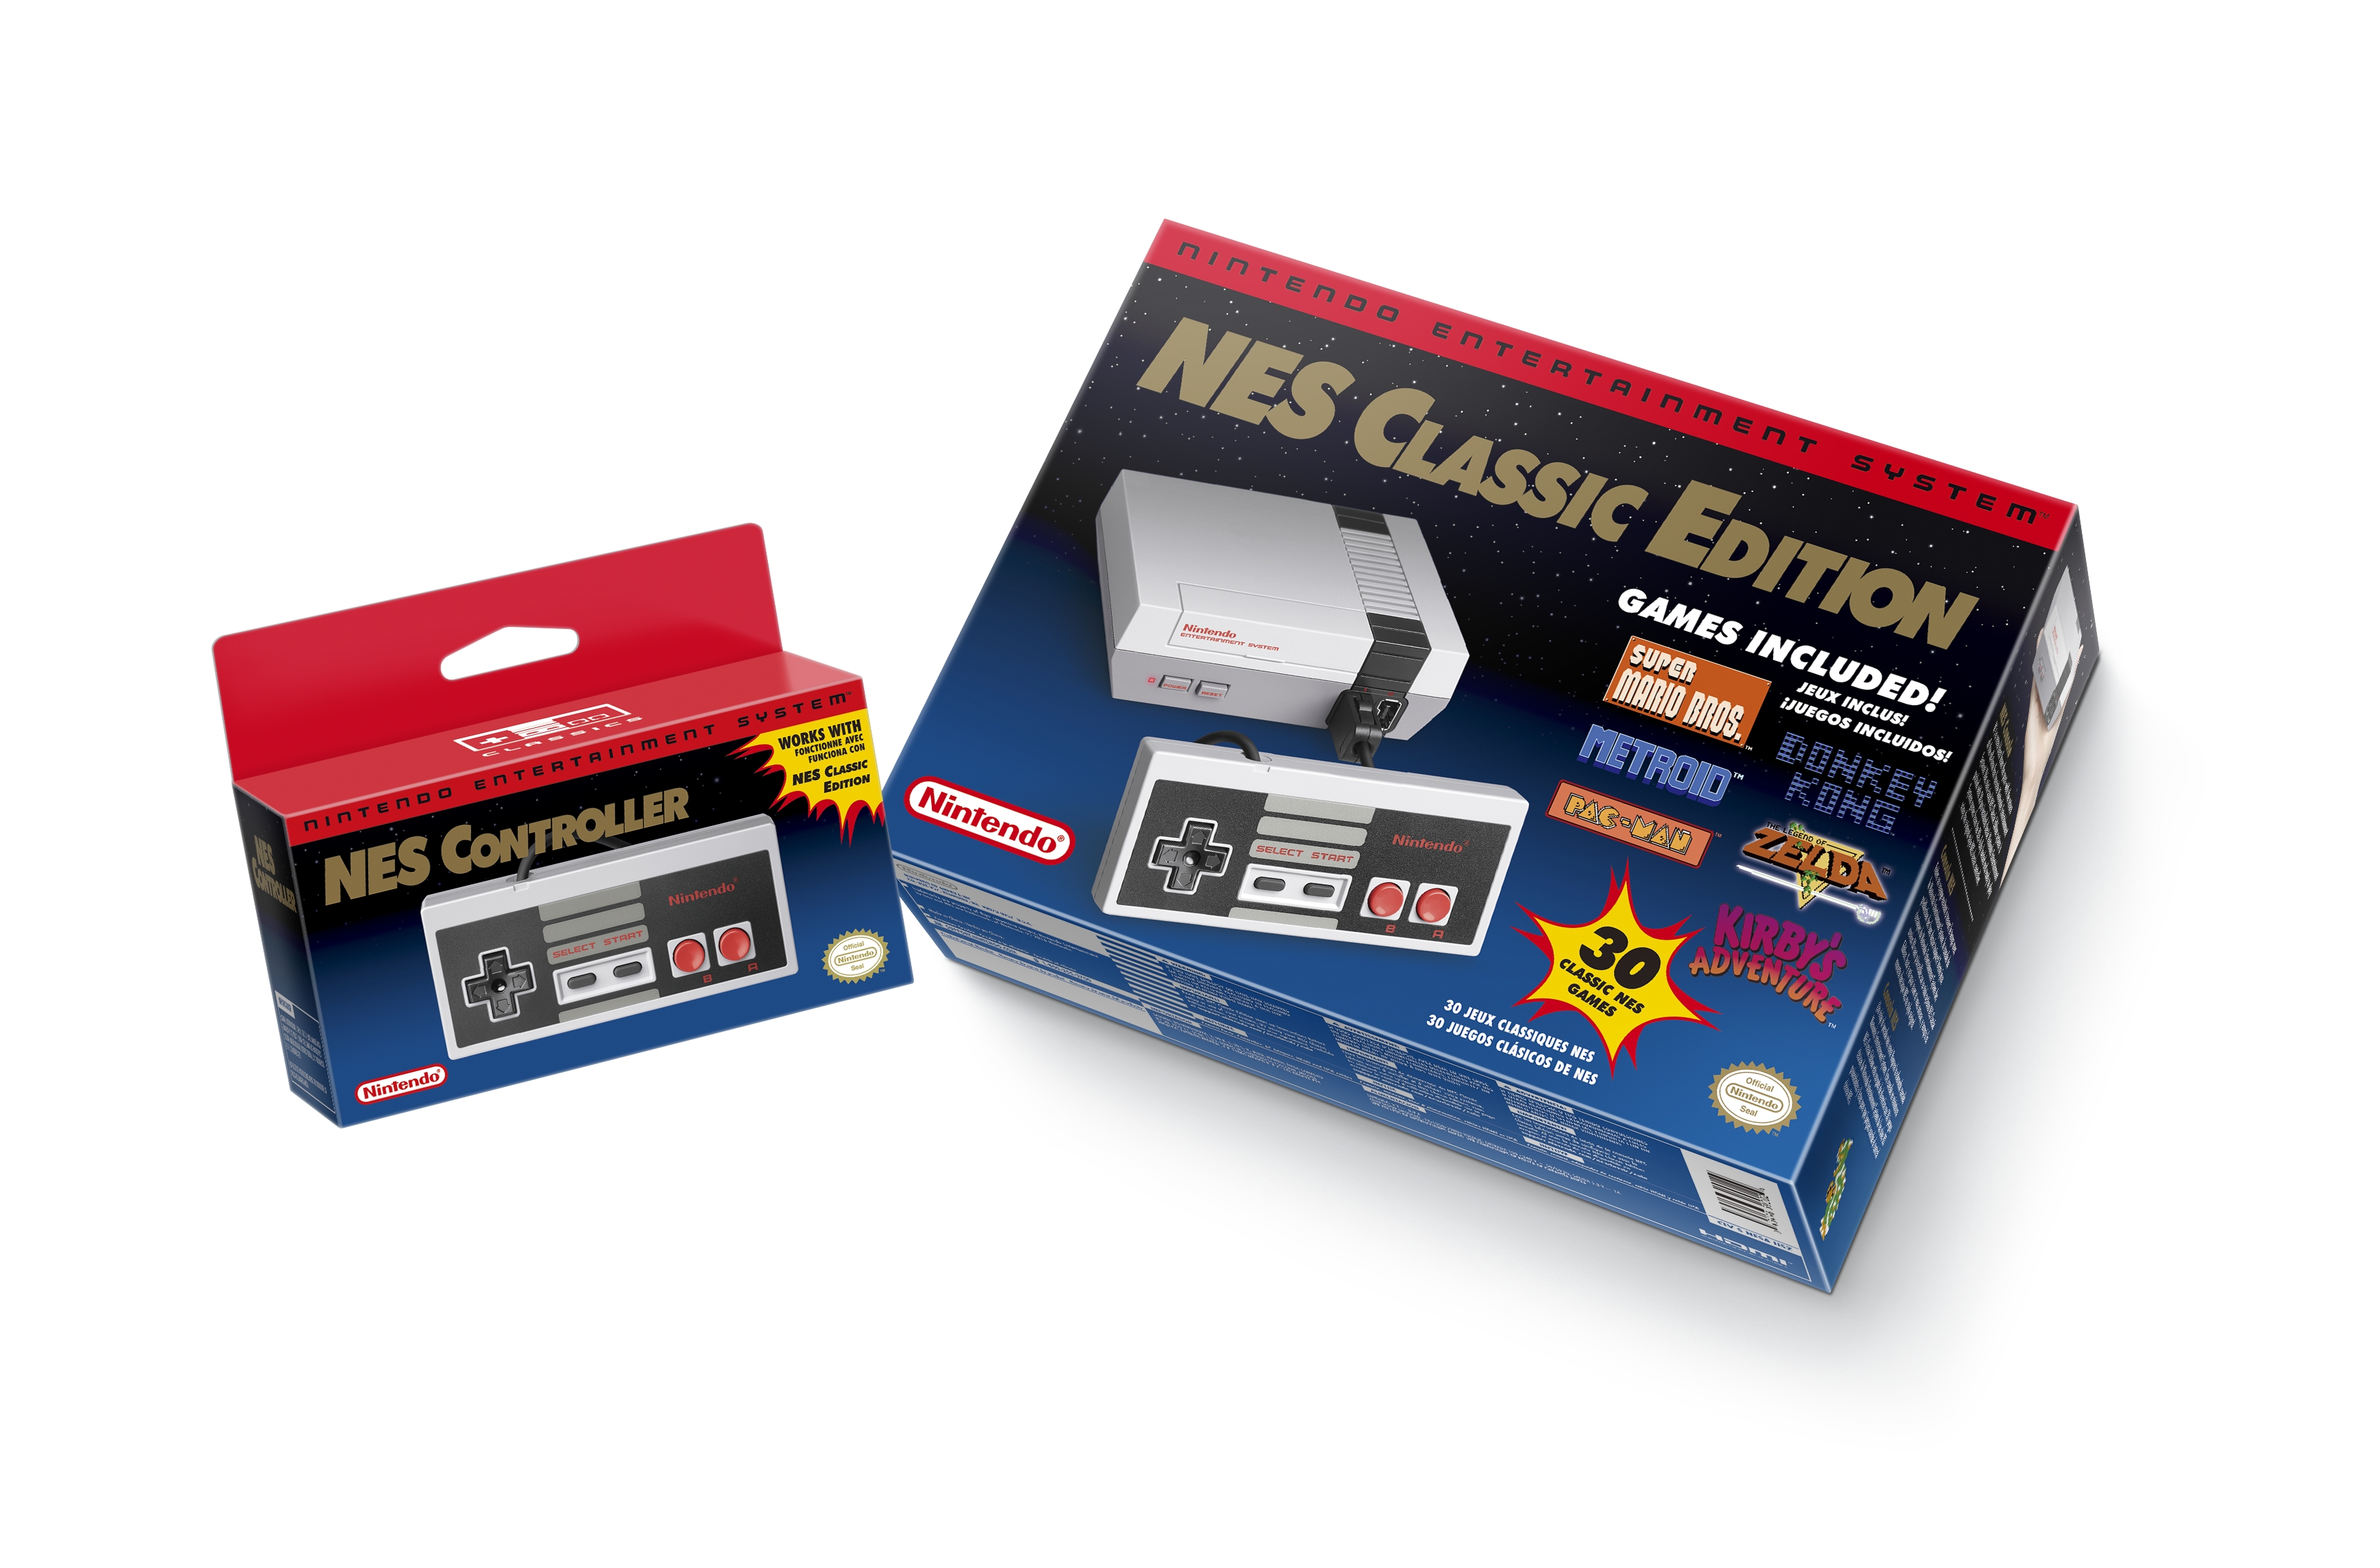 NES Classic & Controller Package Image Credit: https://www.nintendo.com/